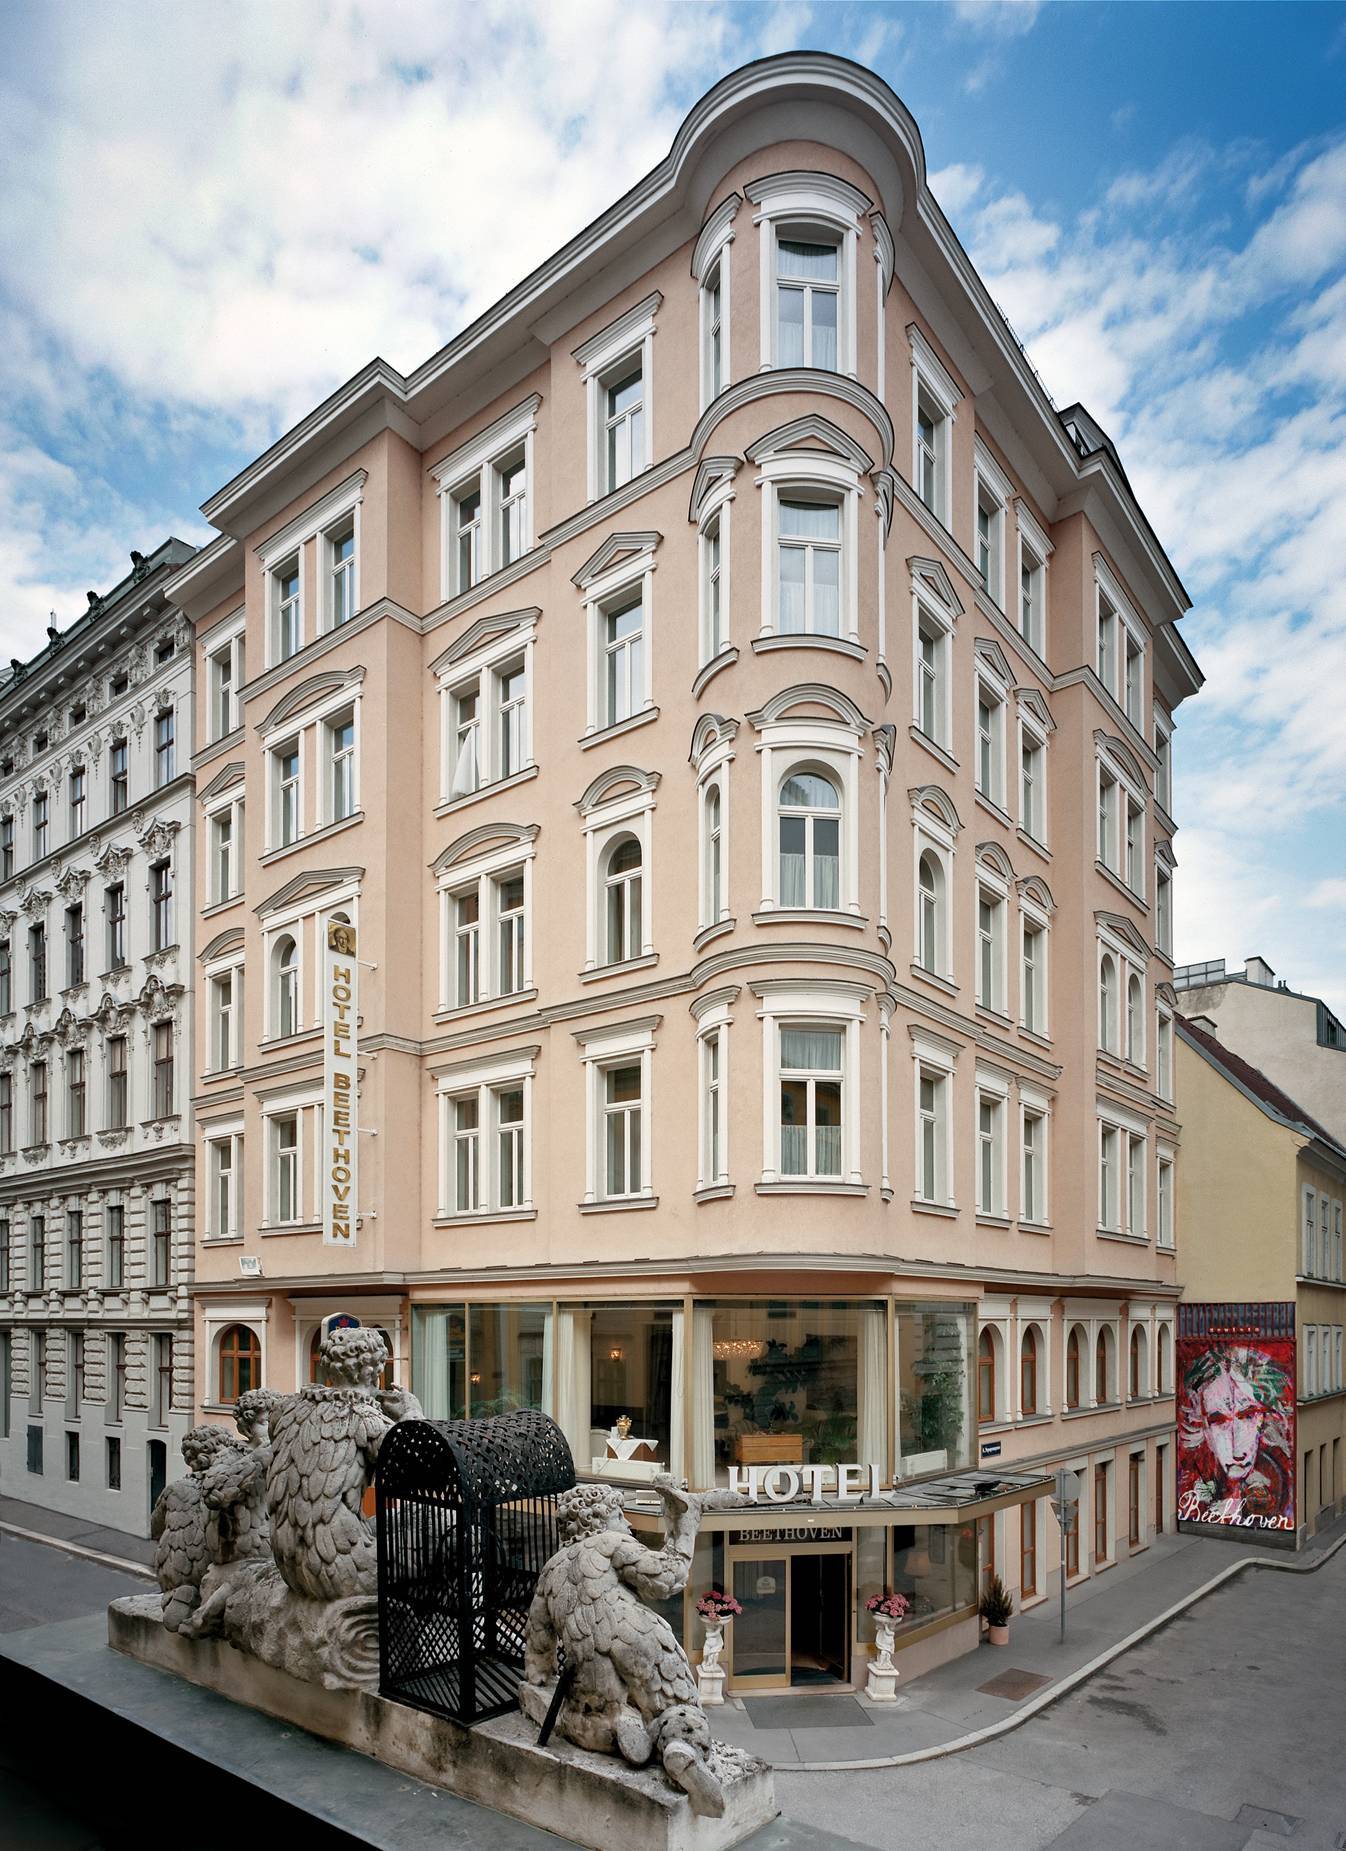 Weekend at Hotel Beethoven in Vienna, Austria